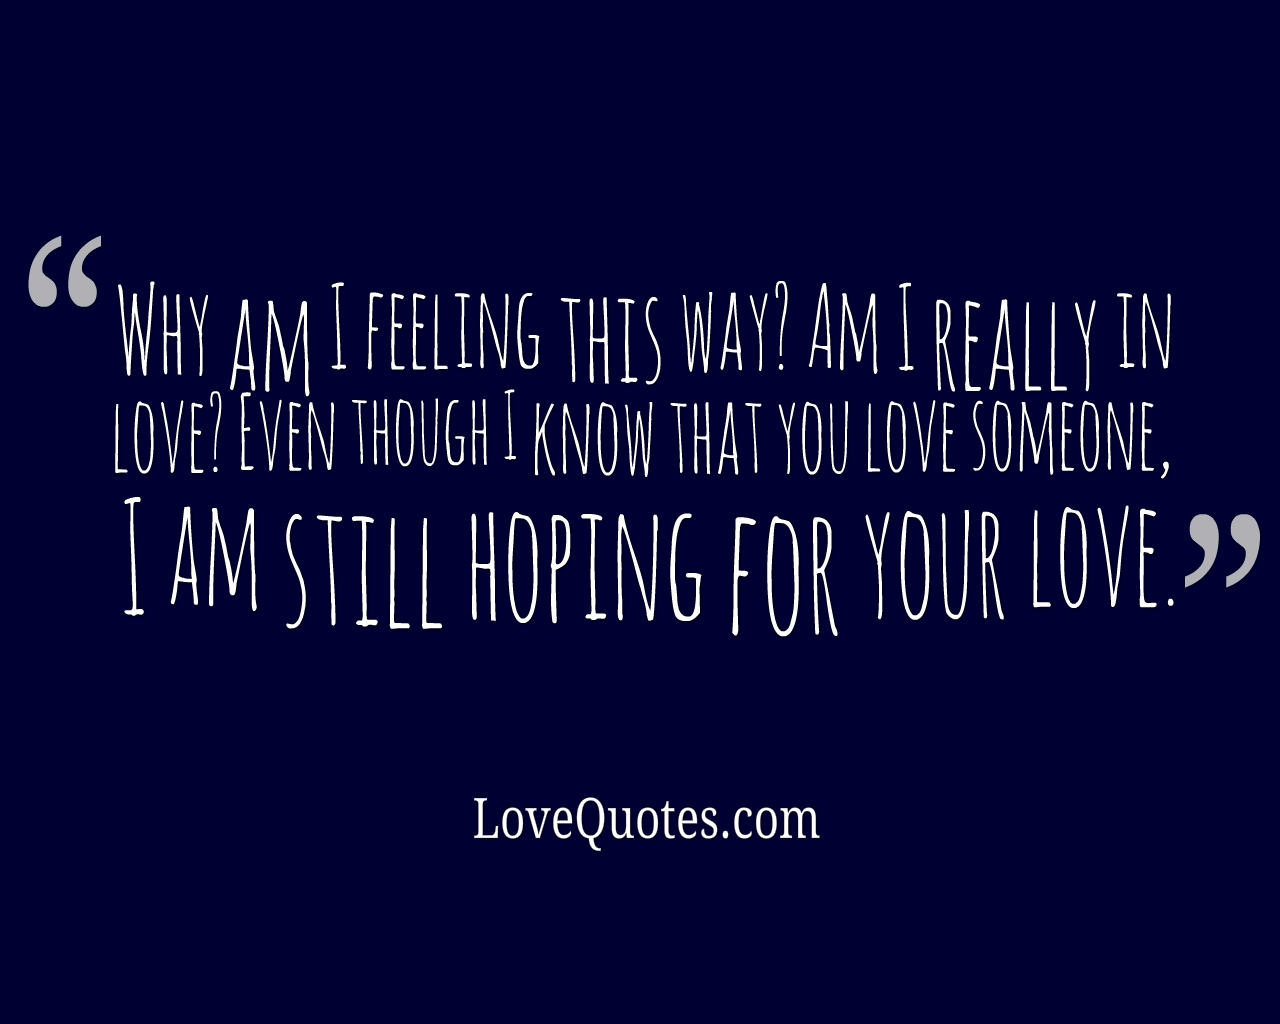 Still Hoping - Love Quotes